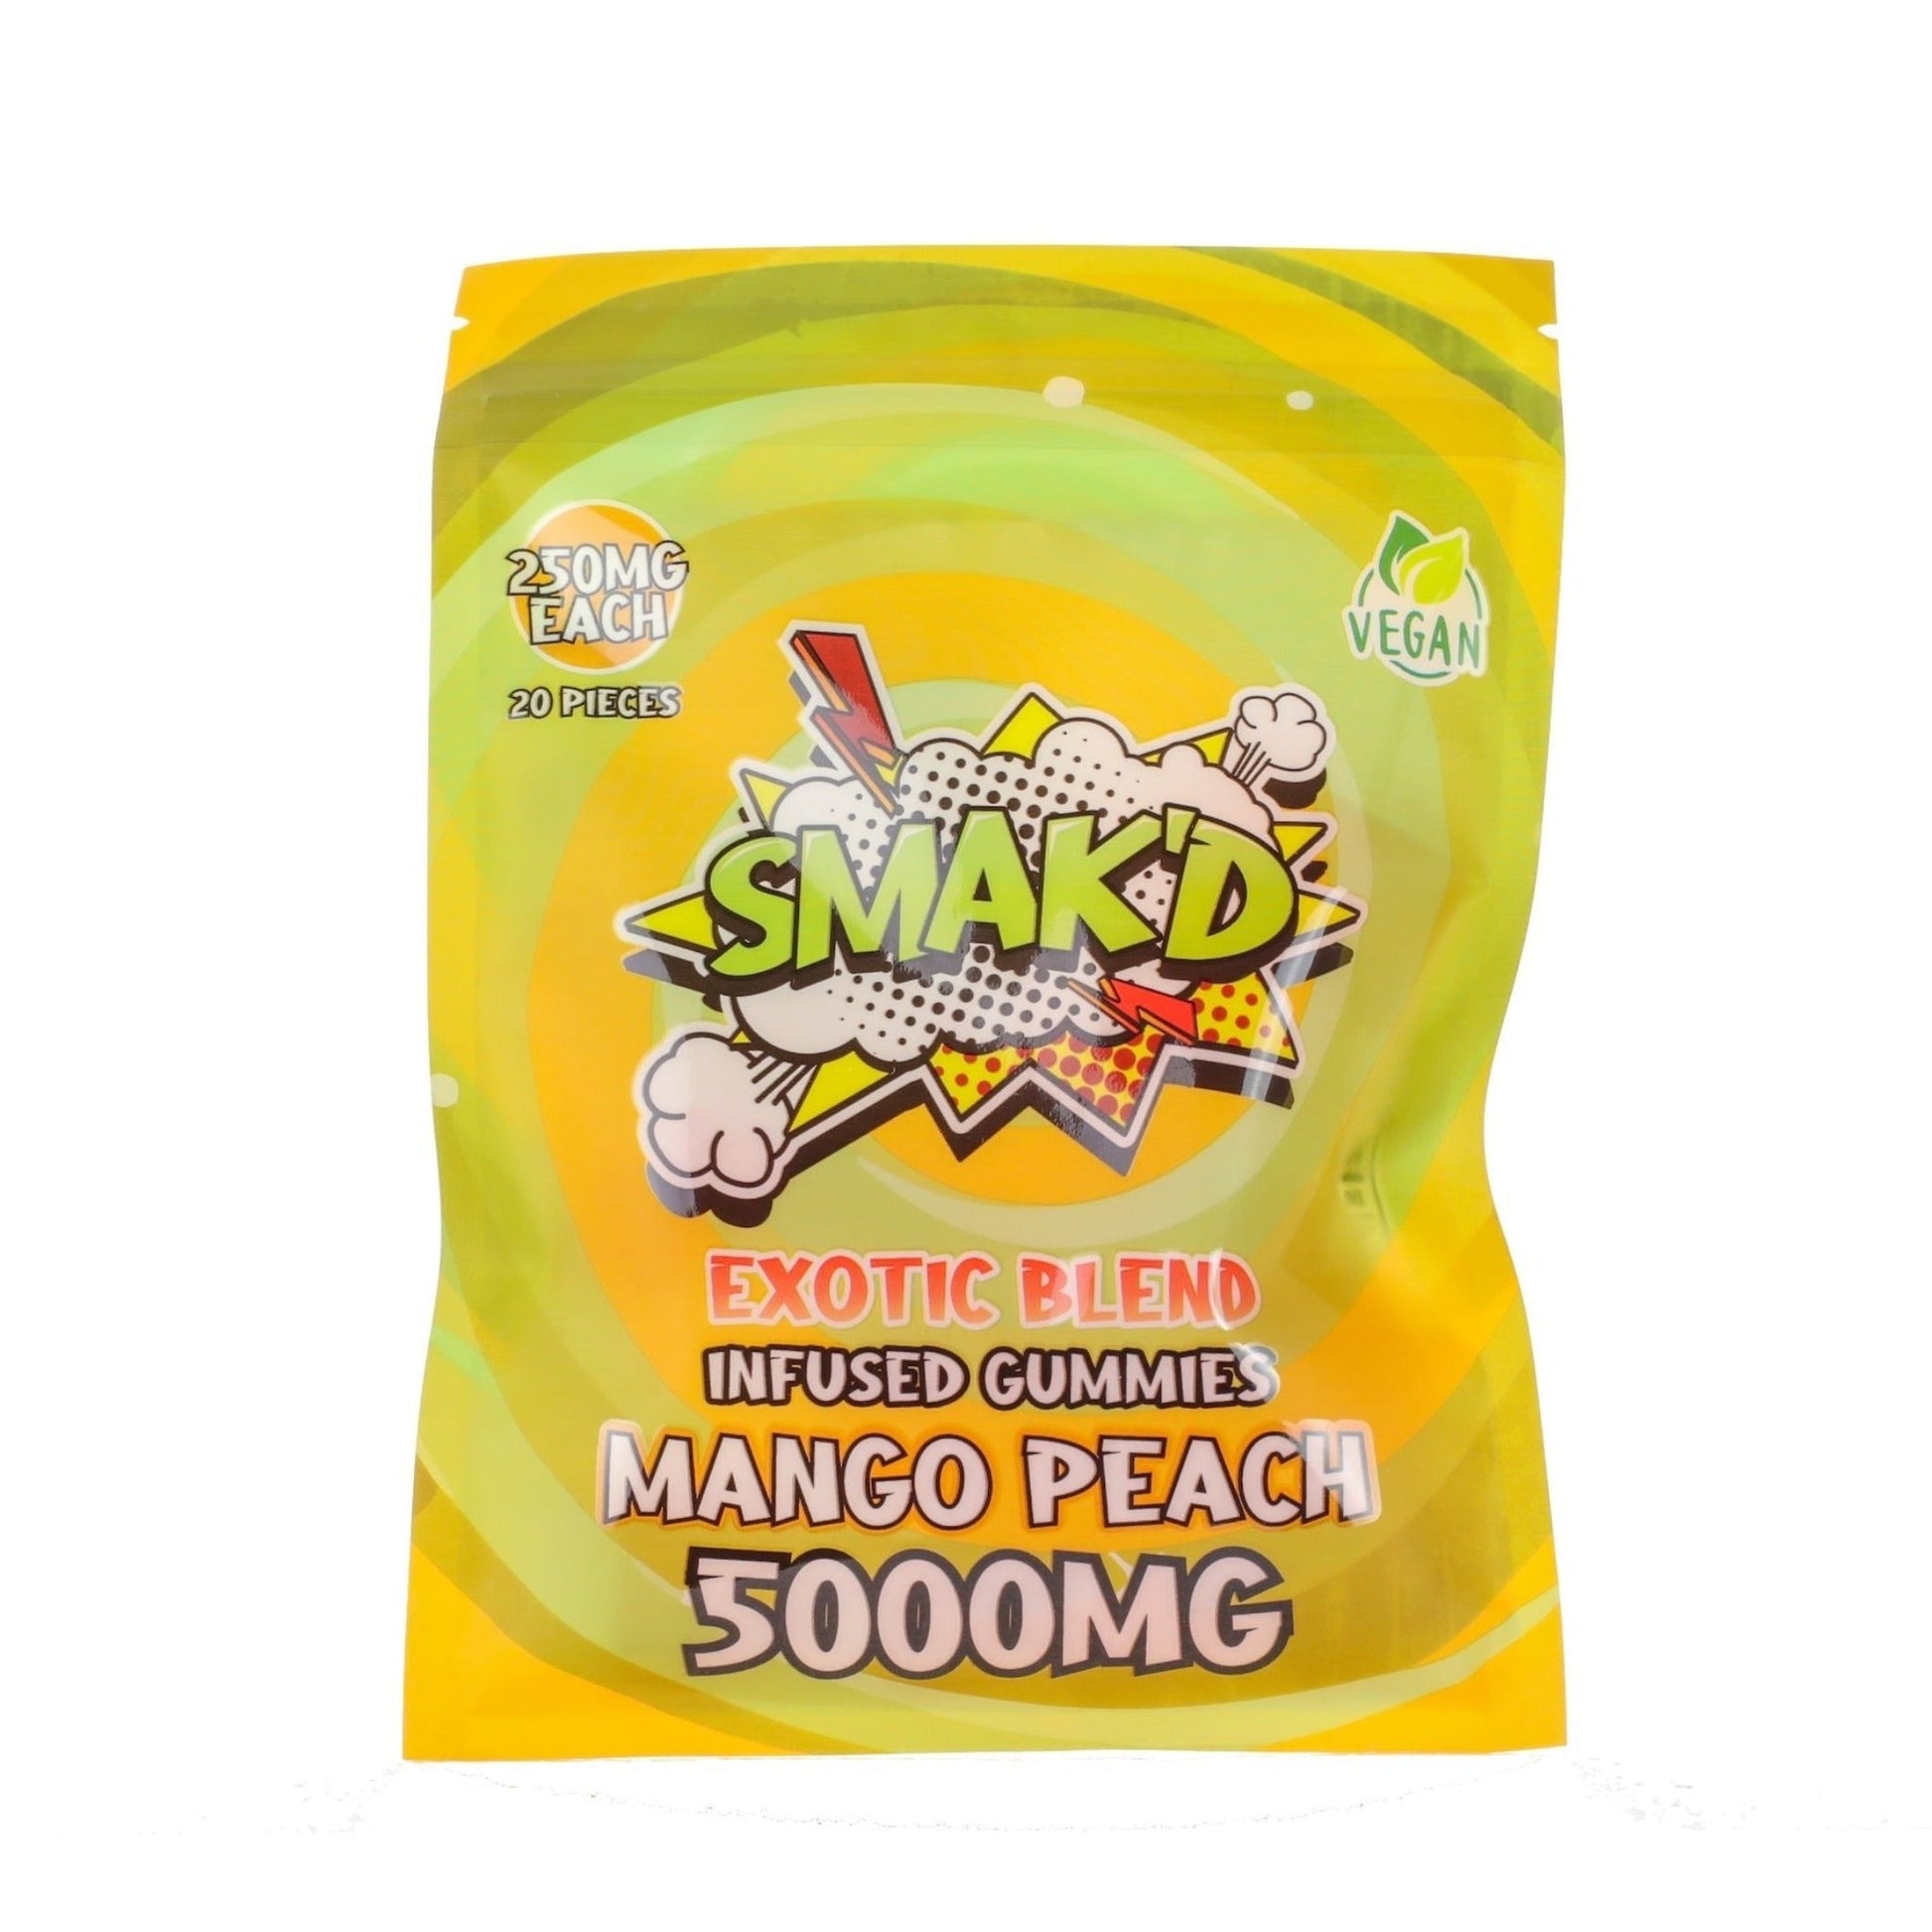 Smakd Exotic Blend Gummies - 5000mg Mango Peach